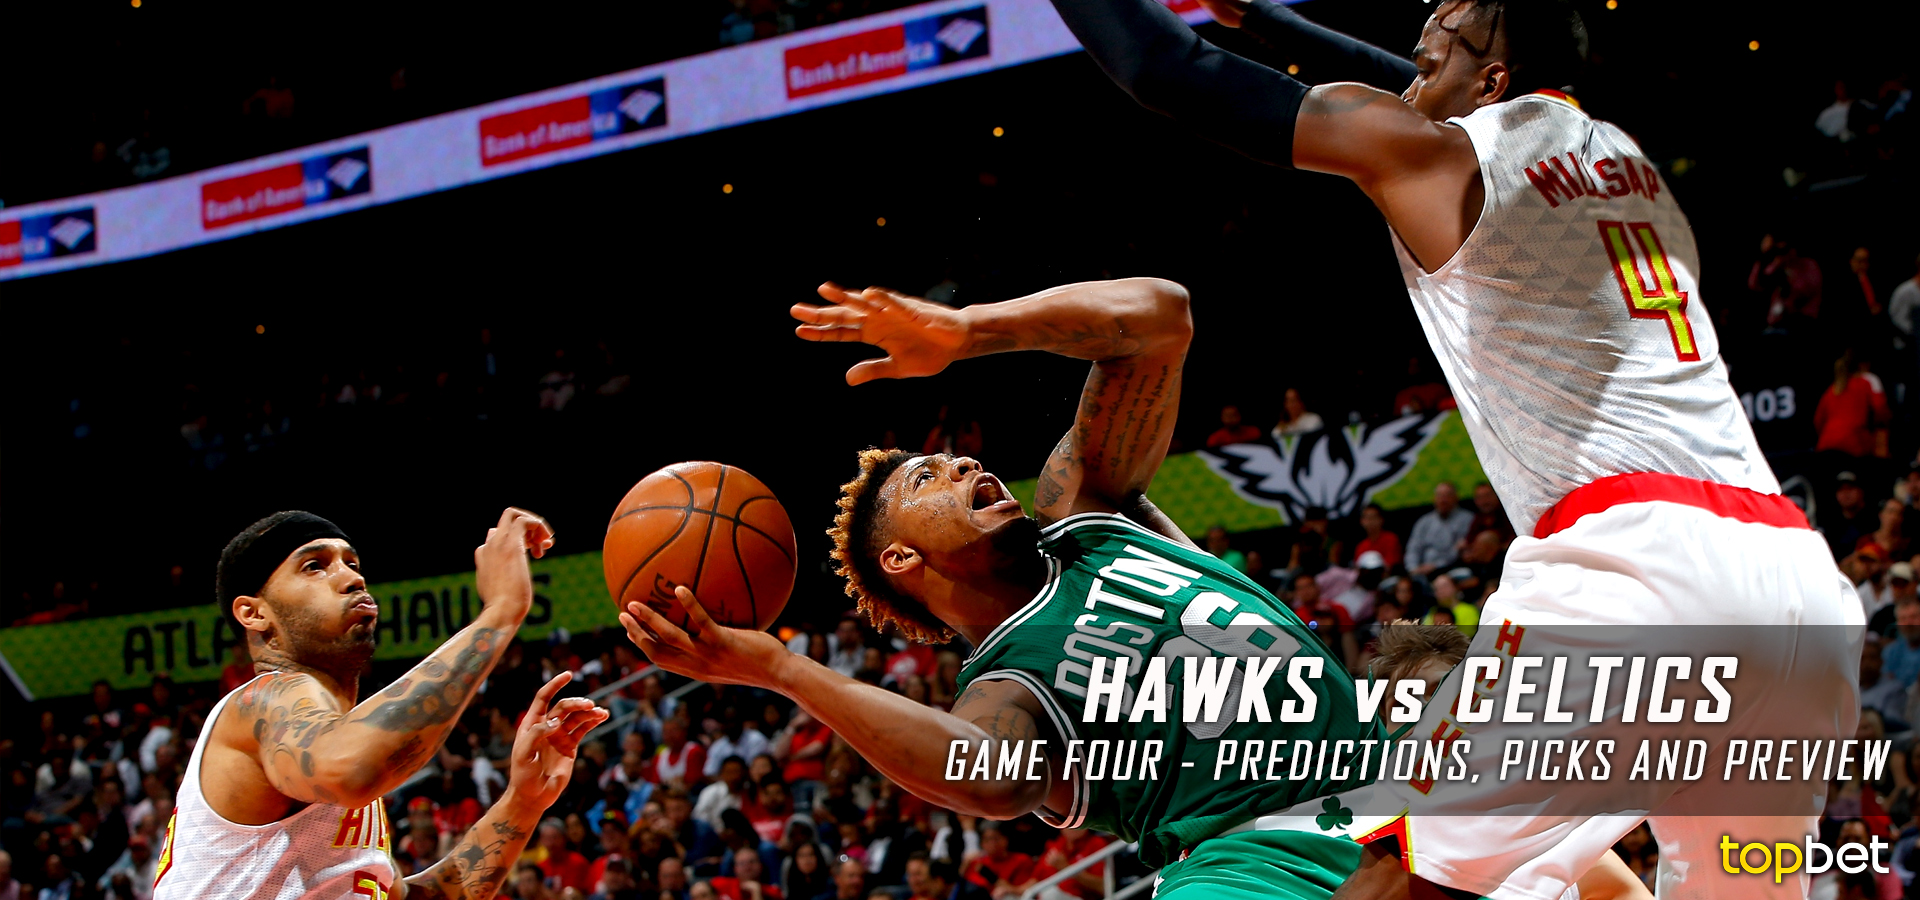 Hawks vs Celtics Series Game 4 Predictions, Picks and Odds1920 x 900